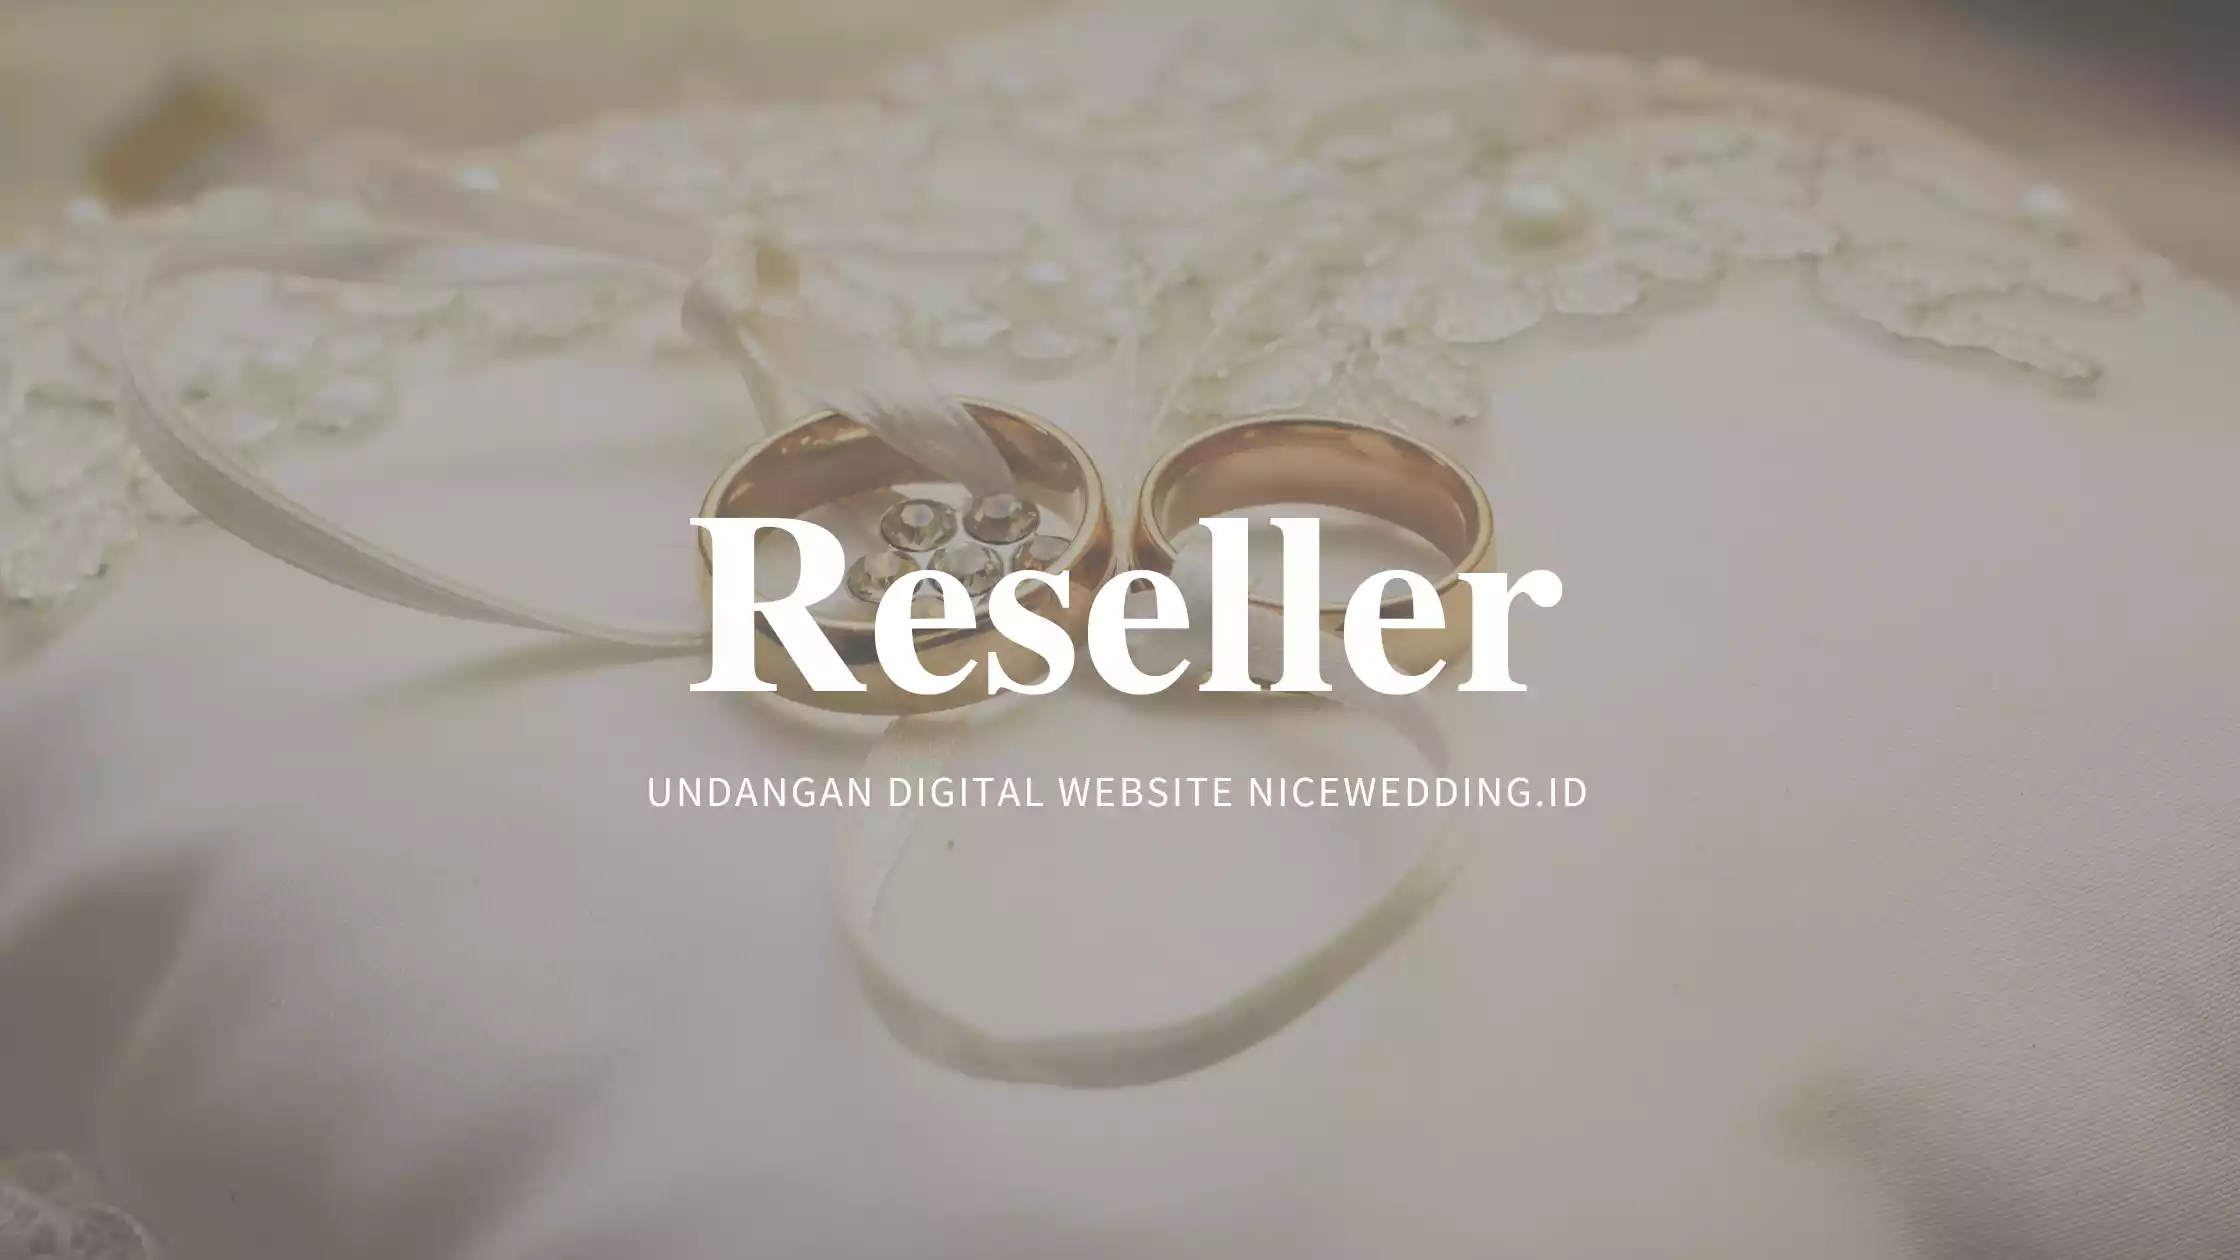 Reseller Undangan Digital Nicewedding.id